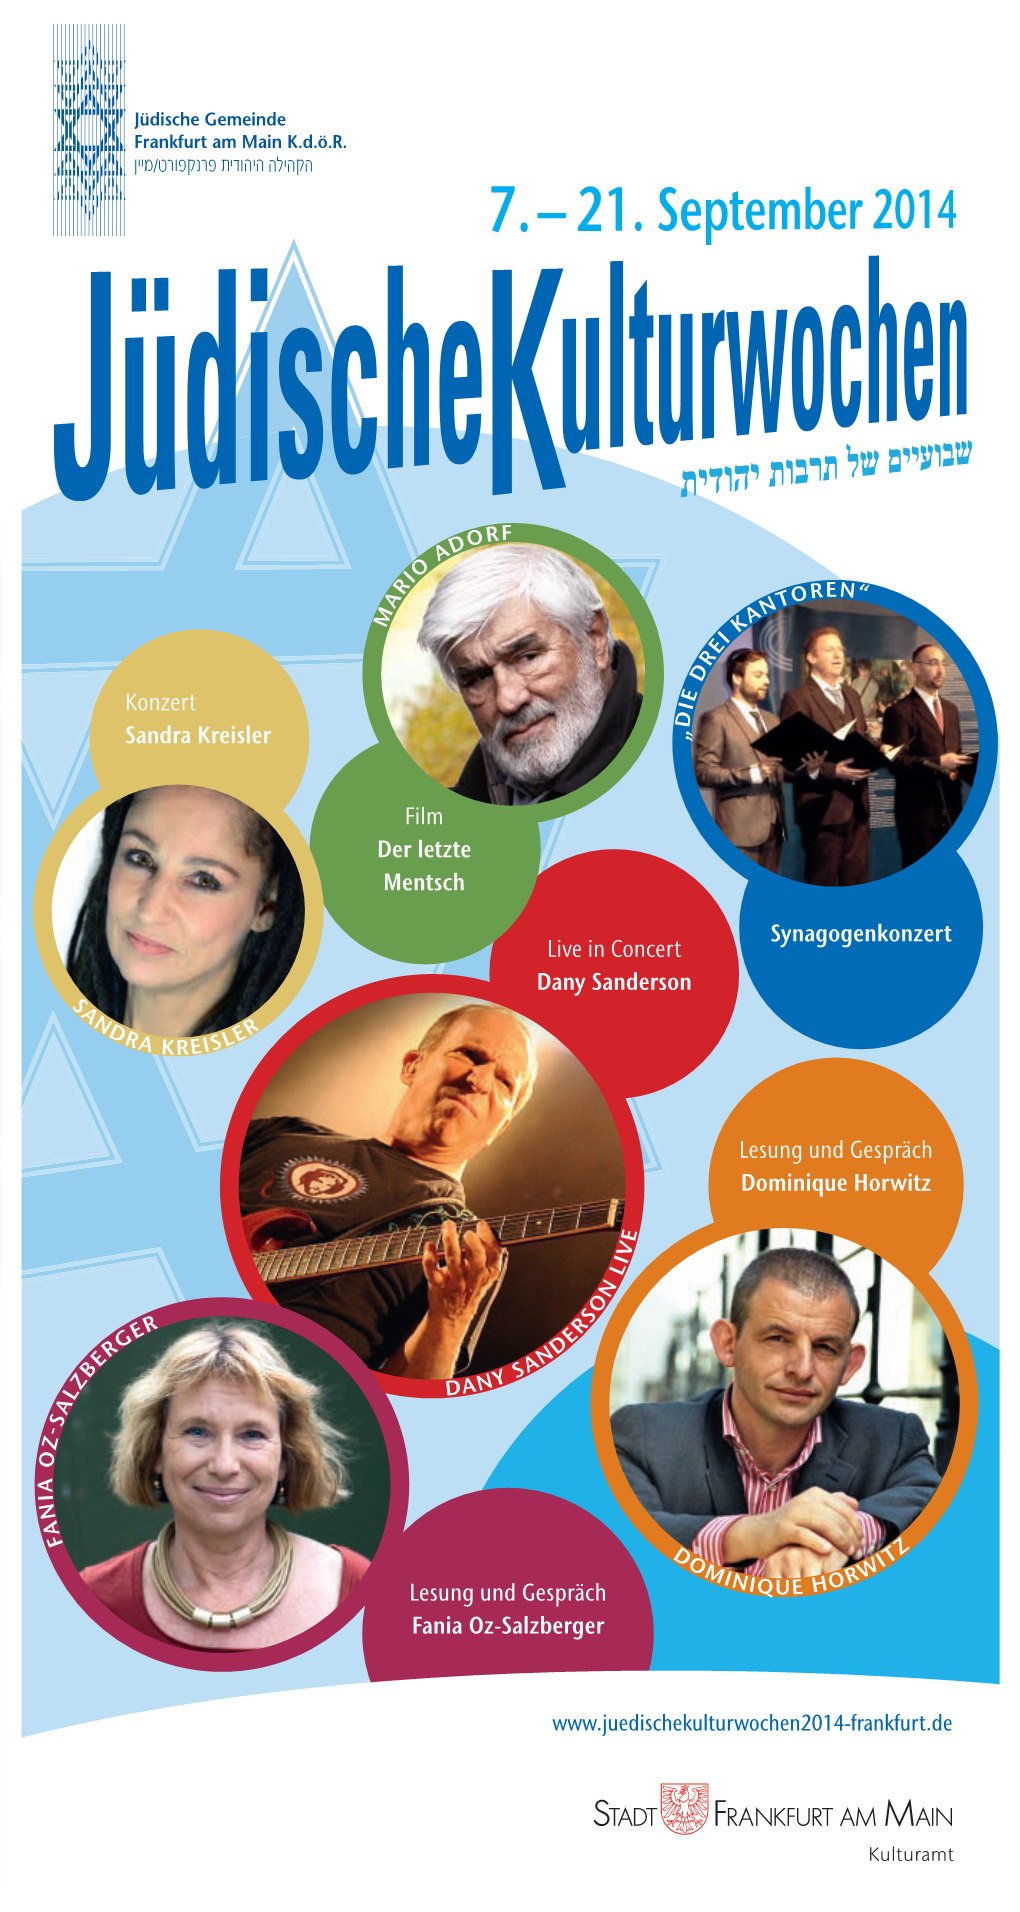 Live in Concert Dany Sanderson Synagogenkonzert Lesung Und